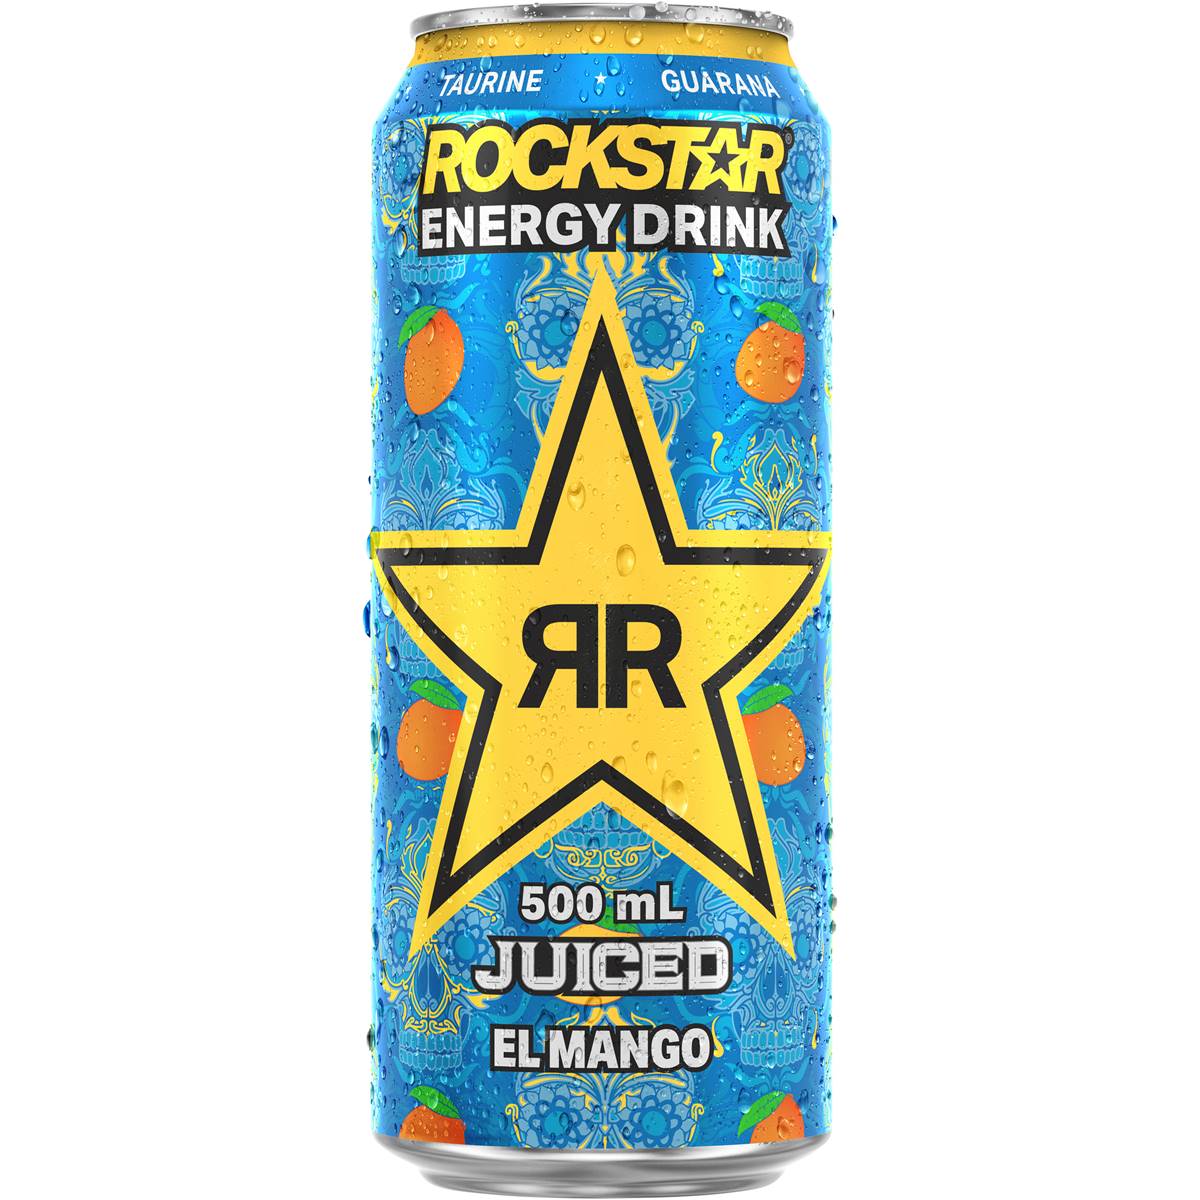 Rockstar Energy Drink Juiced El Mango 500ml